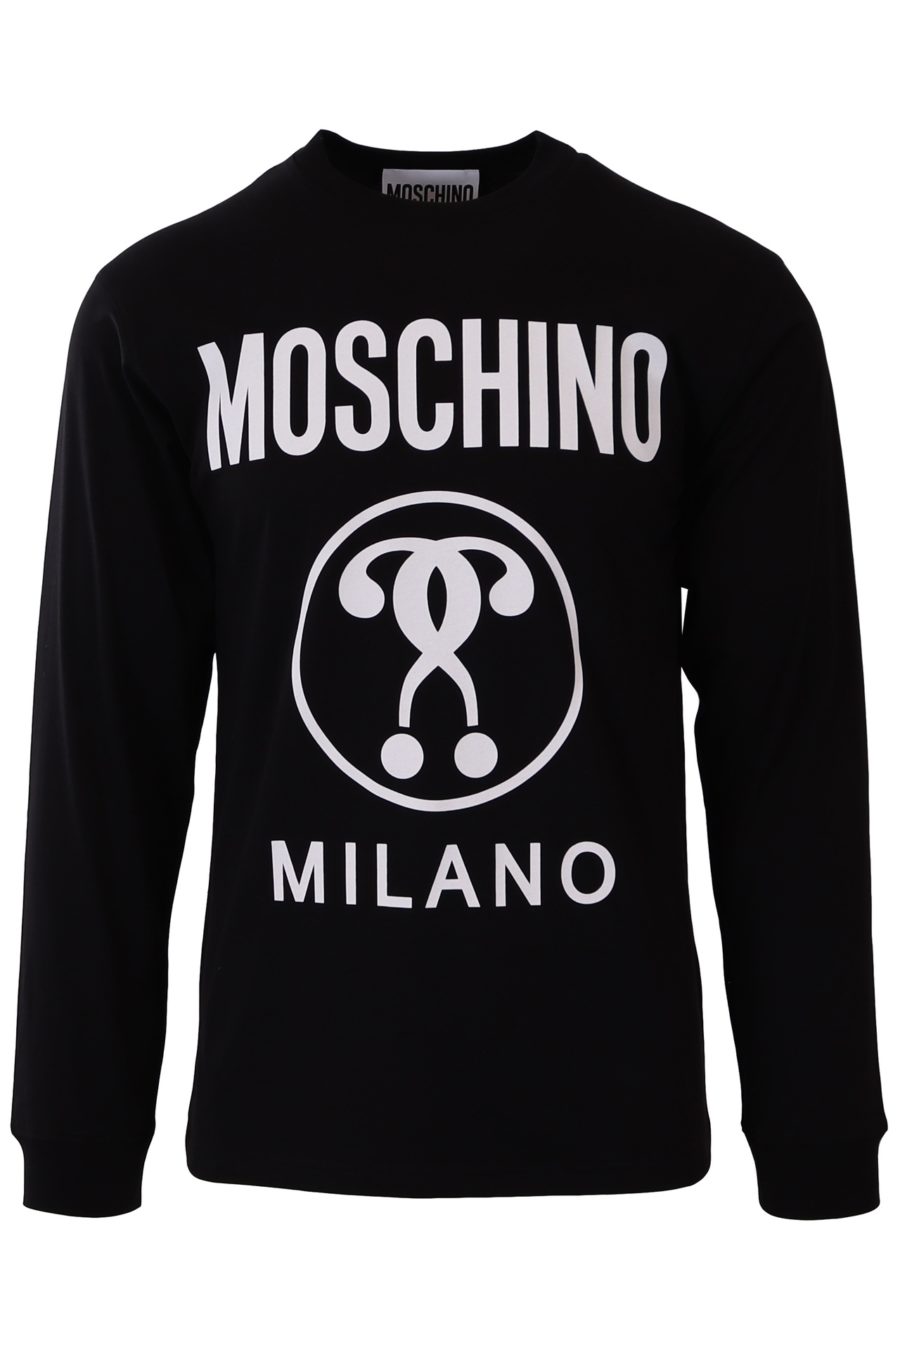 Moschino Couture black long sleeve t-shirt with logo - 2be6884ef085b4431d9eba4ff4fbc4a555a8b945